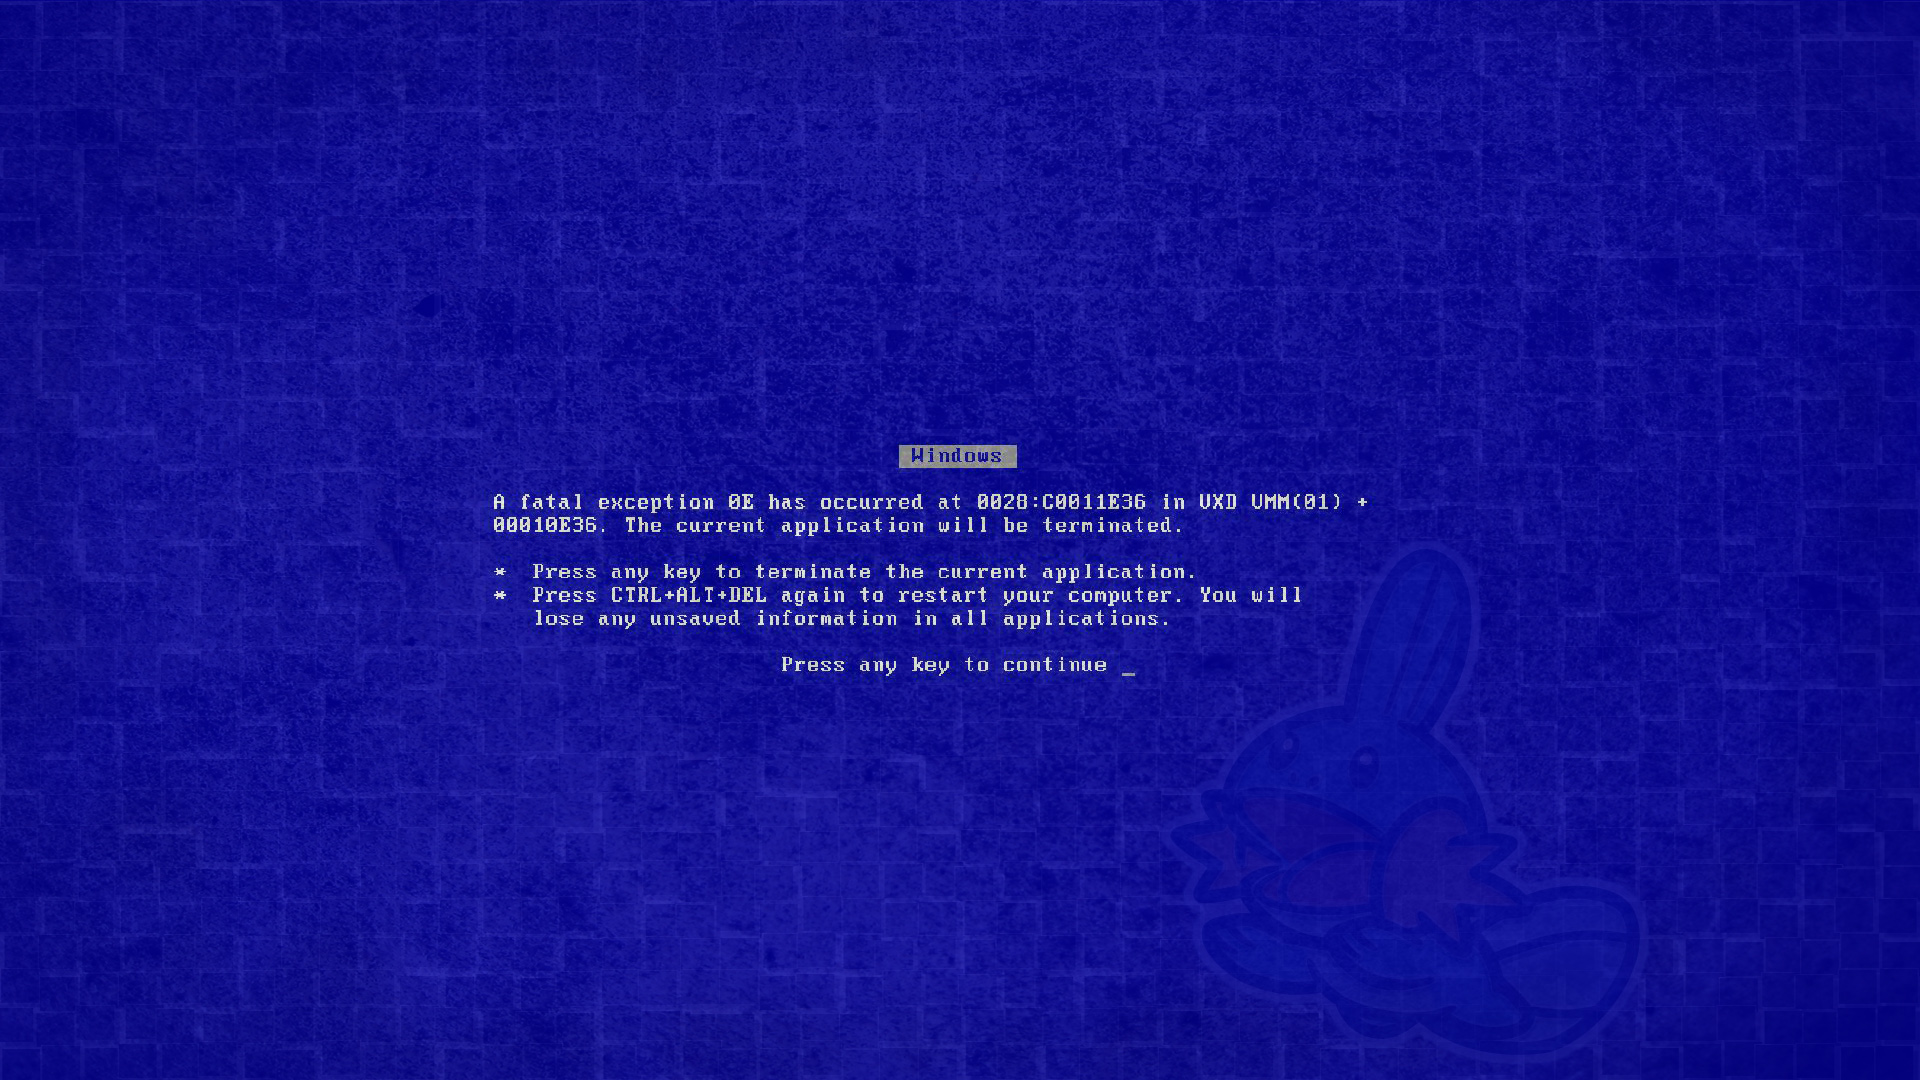 Blue Screen of Death - desktop wallpaper